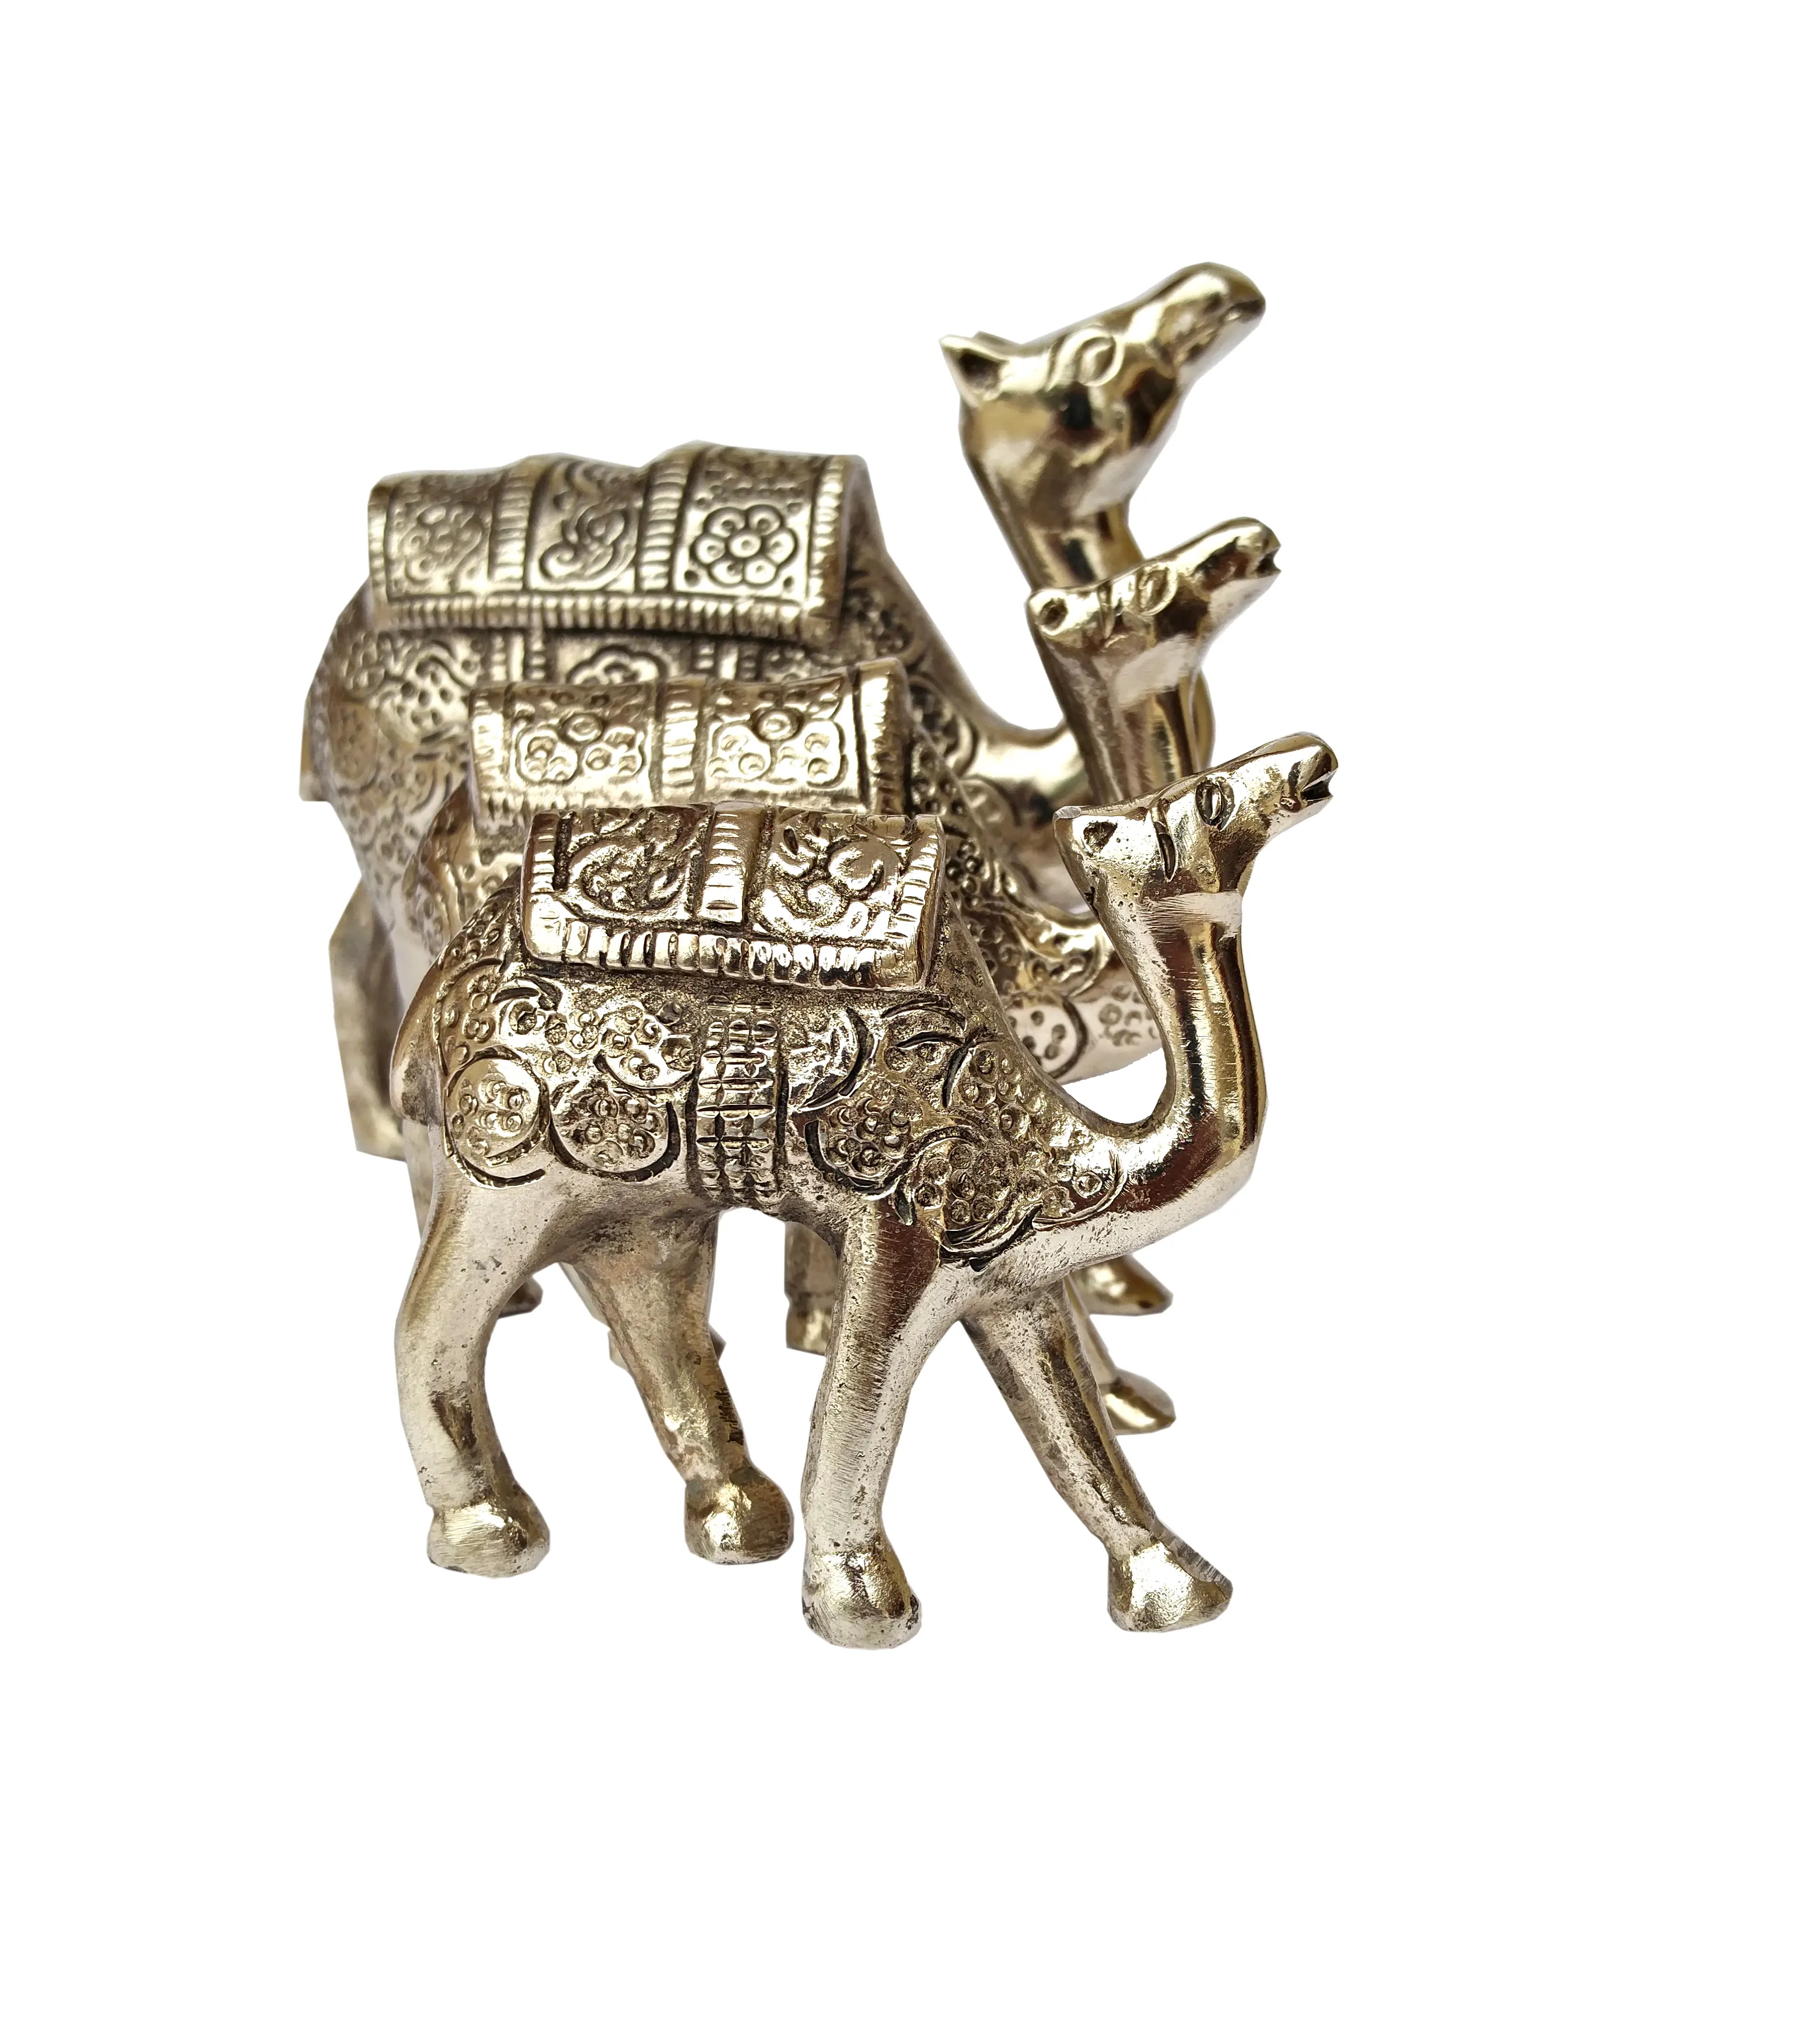 Hecho a mano de latón fundido bronce antiguo plata camello moderno desierto decoración Interior venta fabricante indio Metal artesanía género